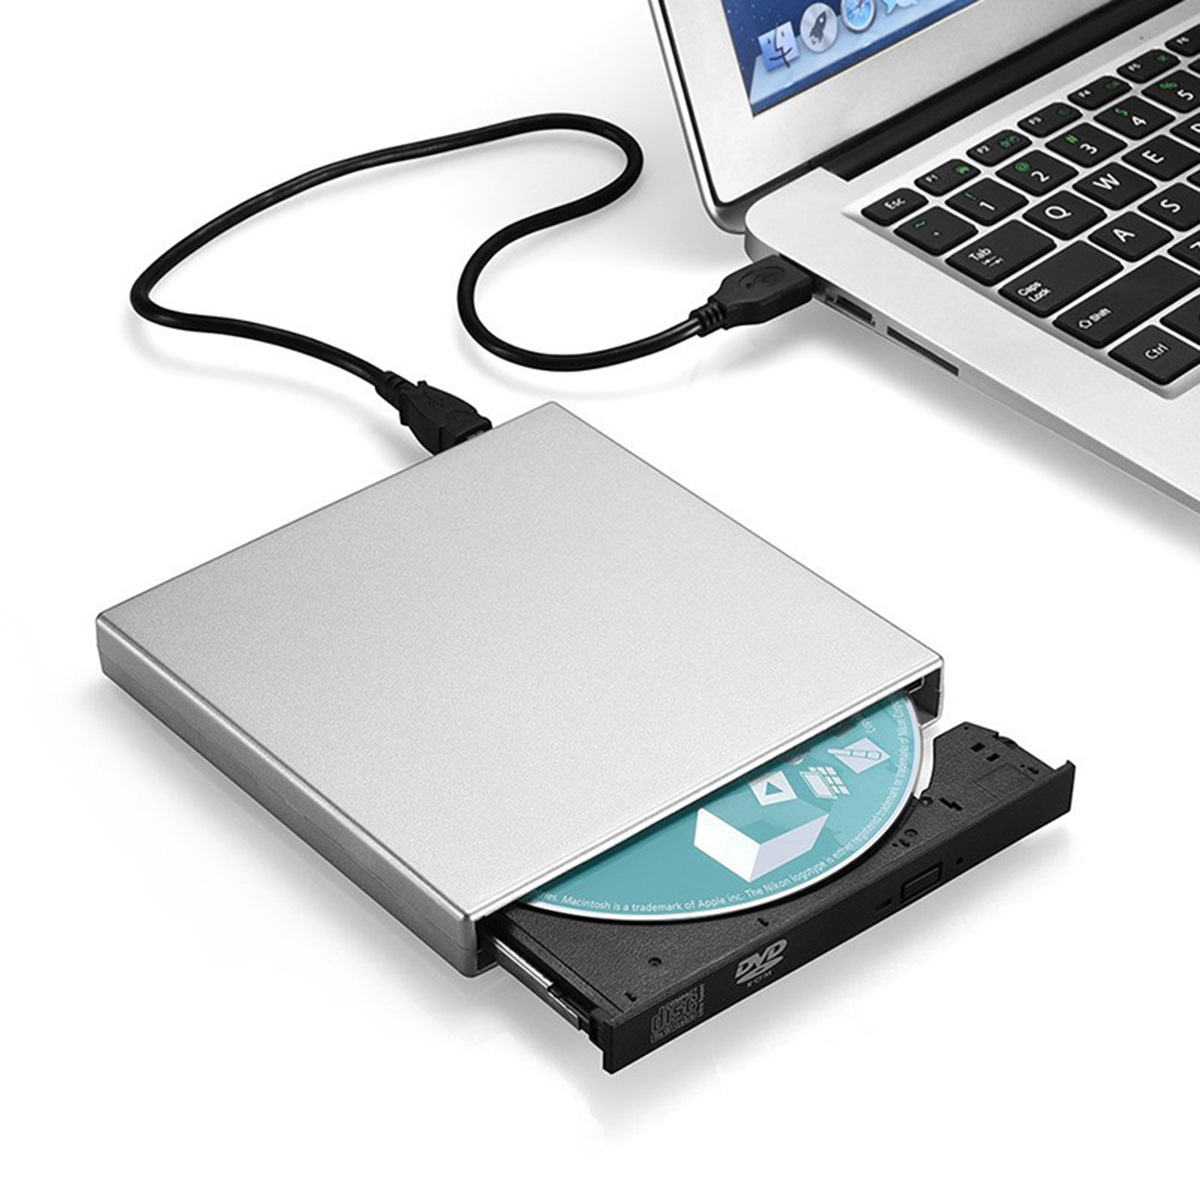 USB 2.0 Draagbare Externe Slot-In DVD-RW CD-RW CD DVD ROM Speler Drive Schrijver Rewriter Brander Ultra Slim Voor PC Windows